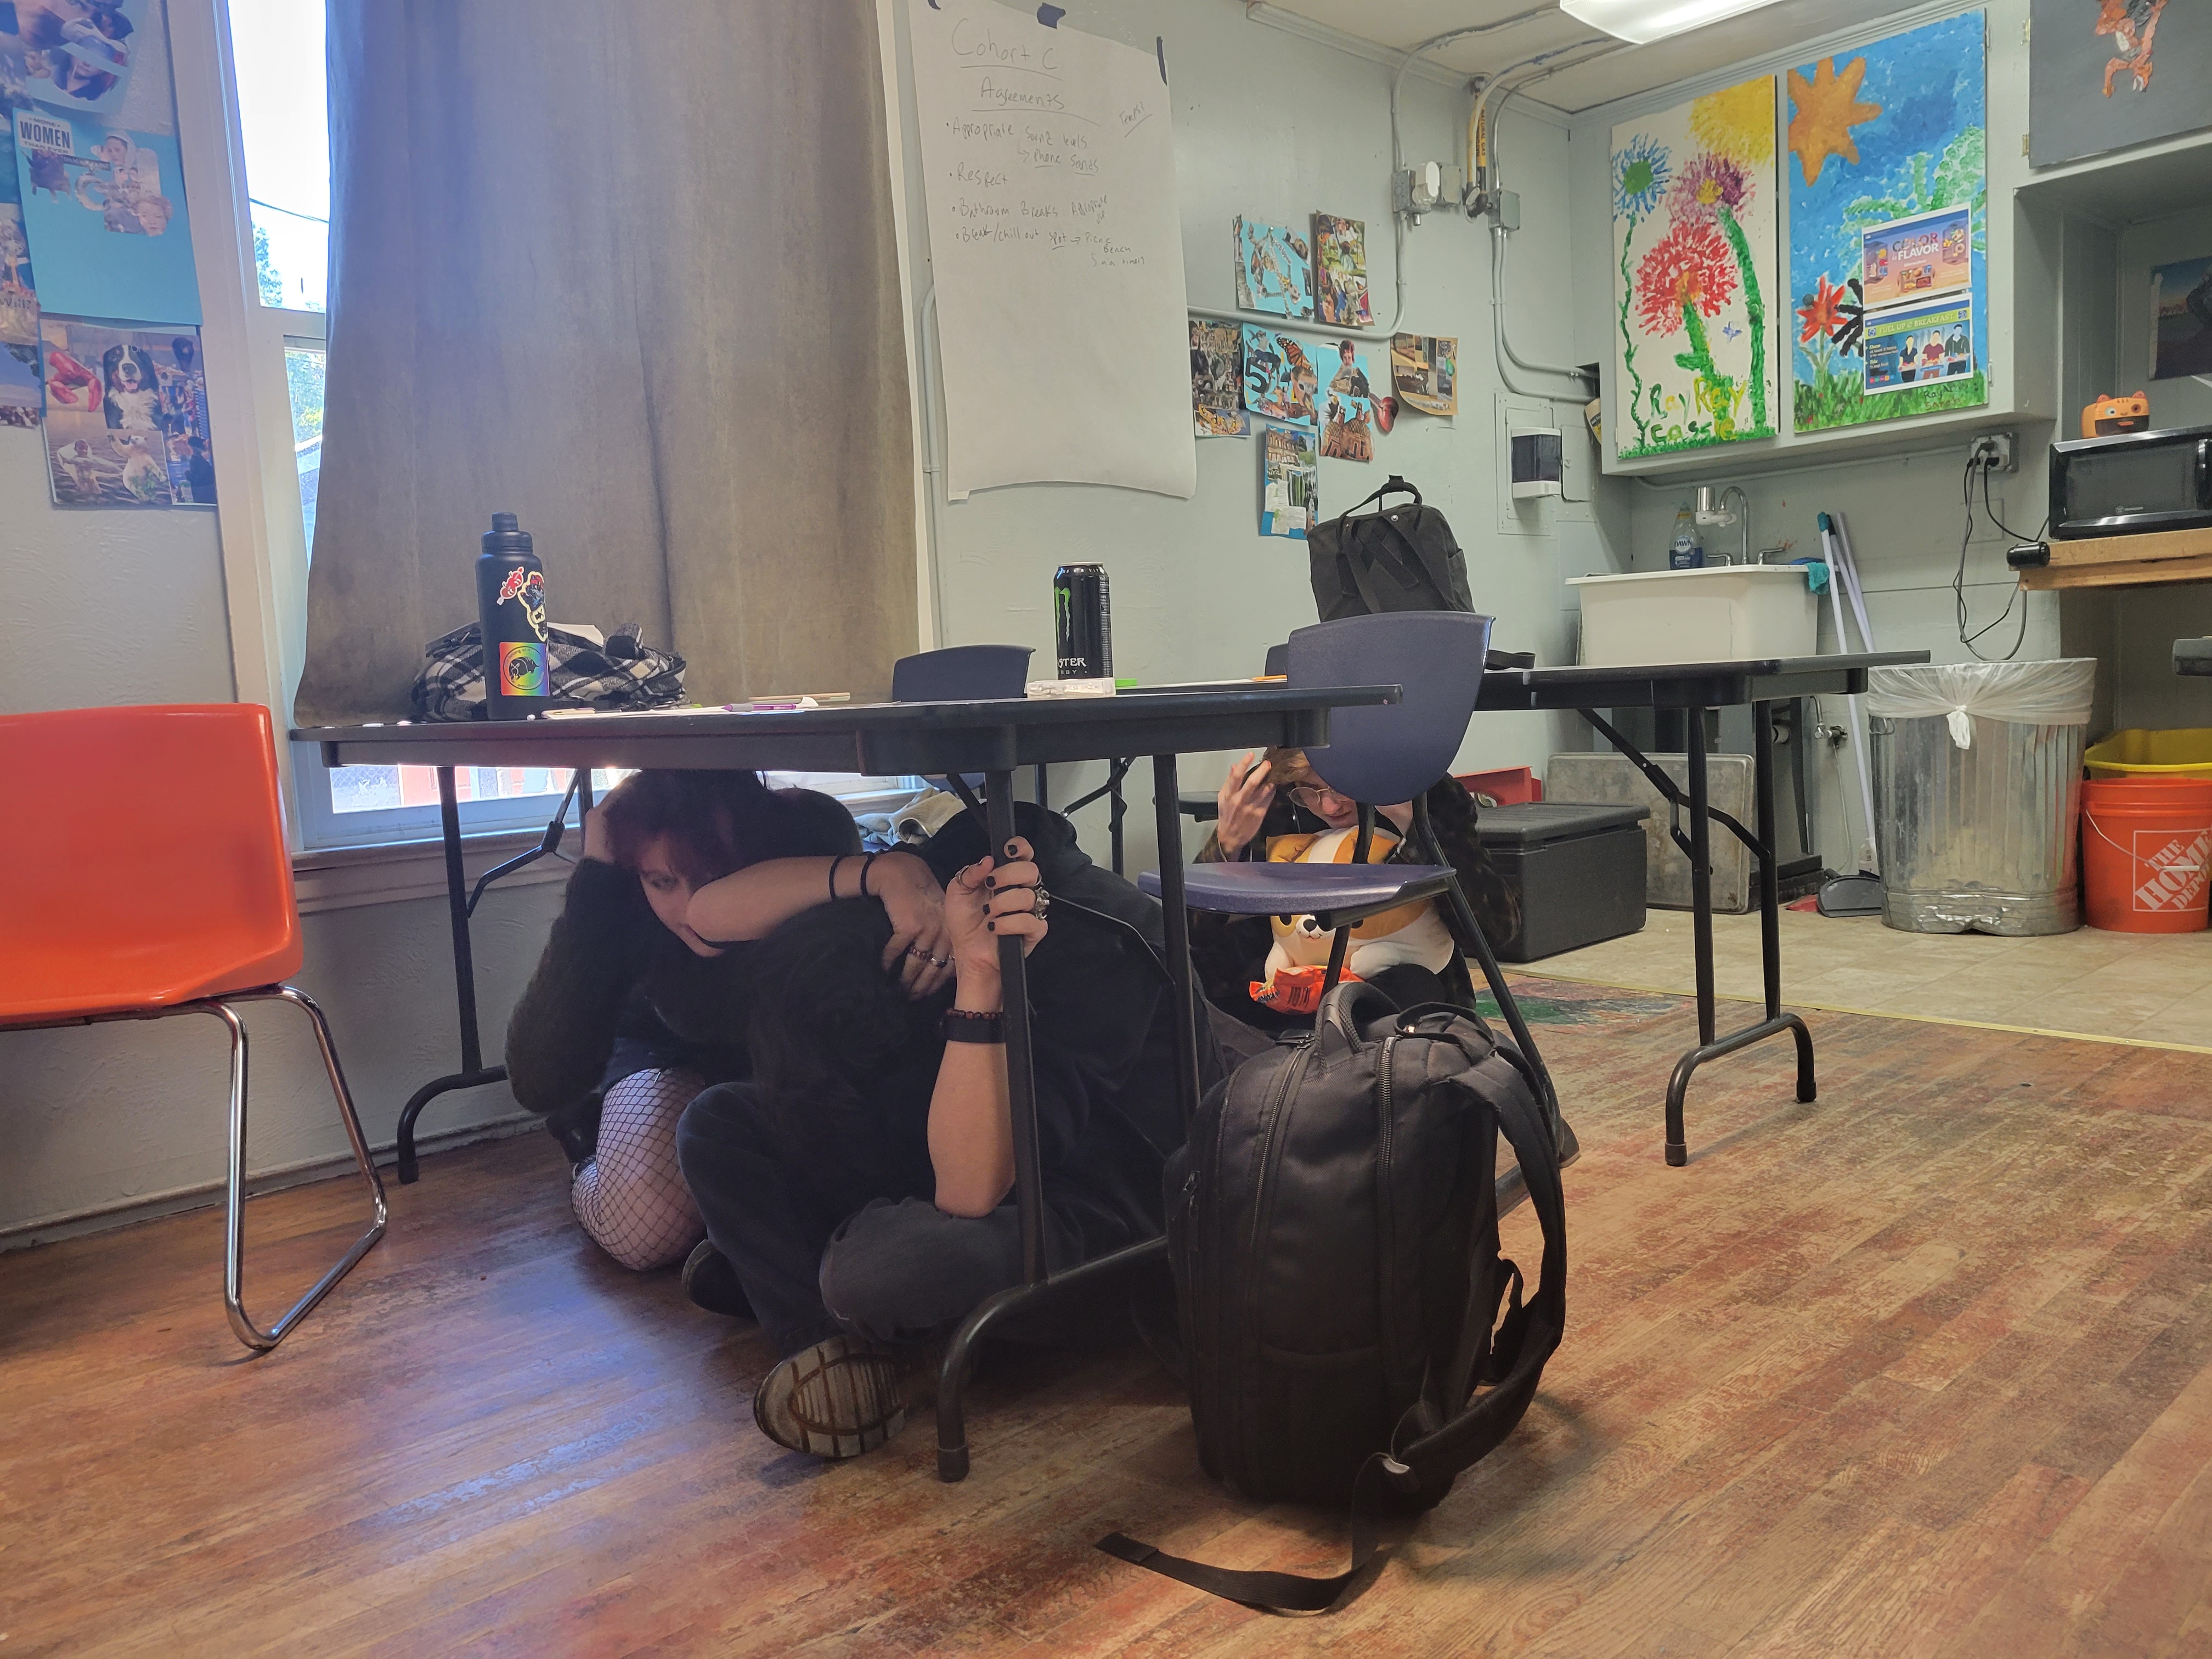 Students under desk 